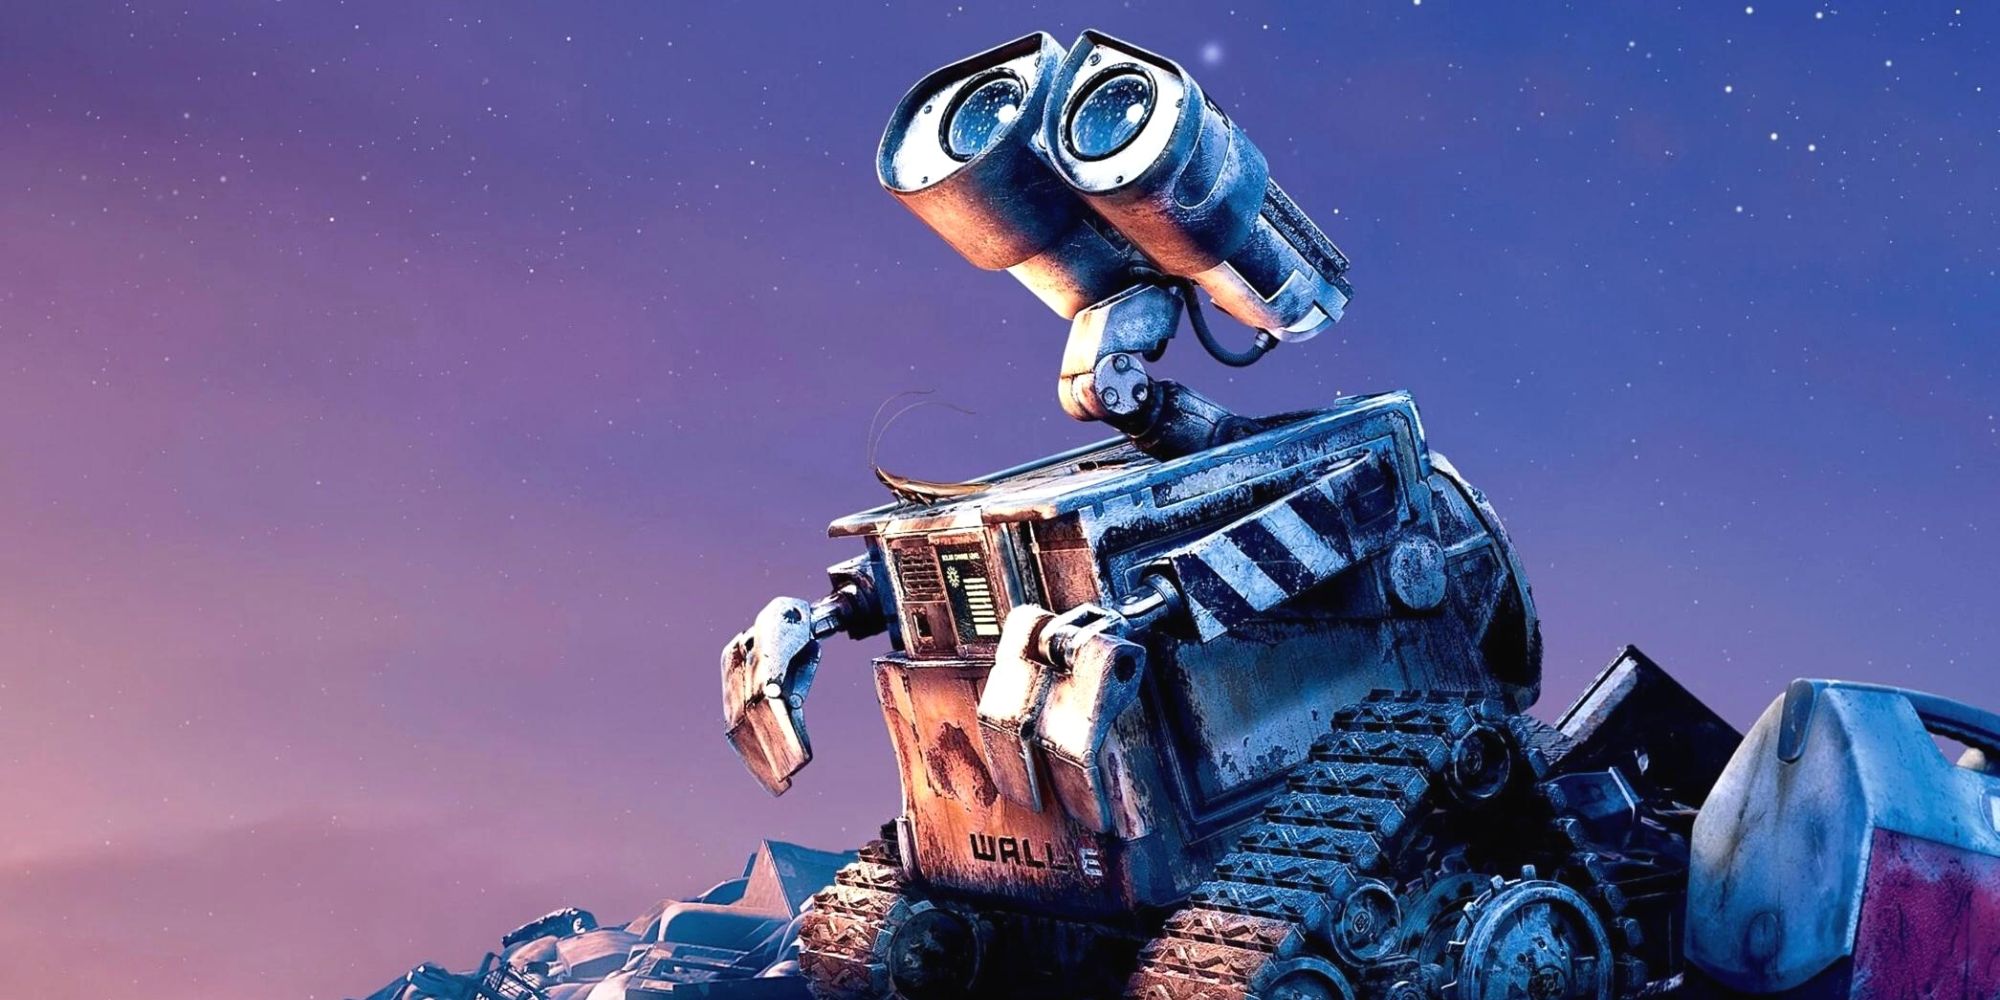 Wall-E in Wall-E